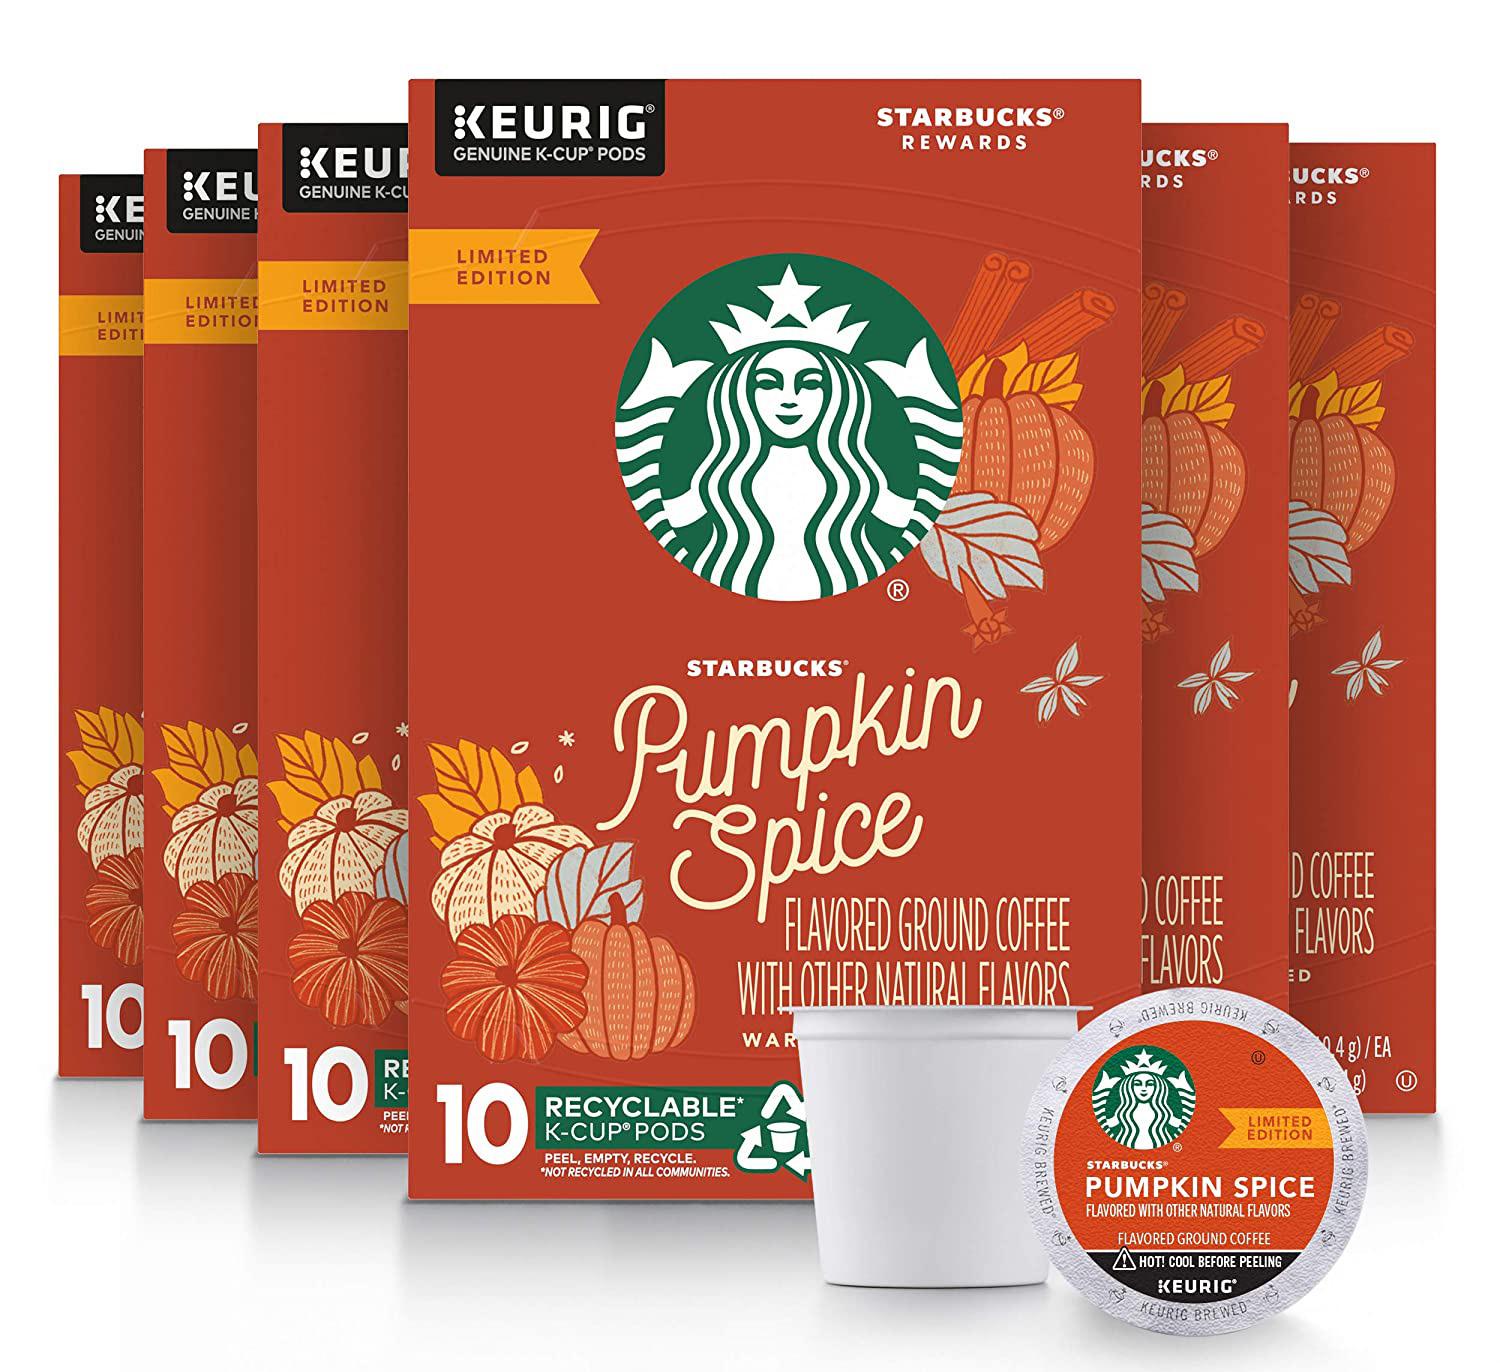 60 Starbucks Keurig Pumpkin Spice K-Cup Coffee Pods for $24.98